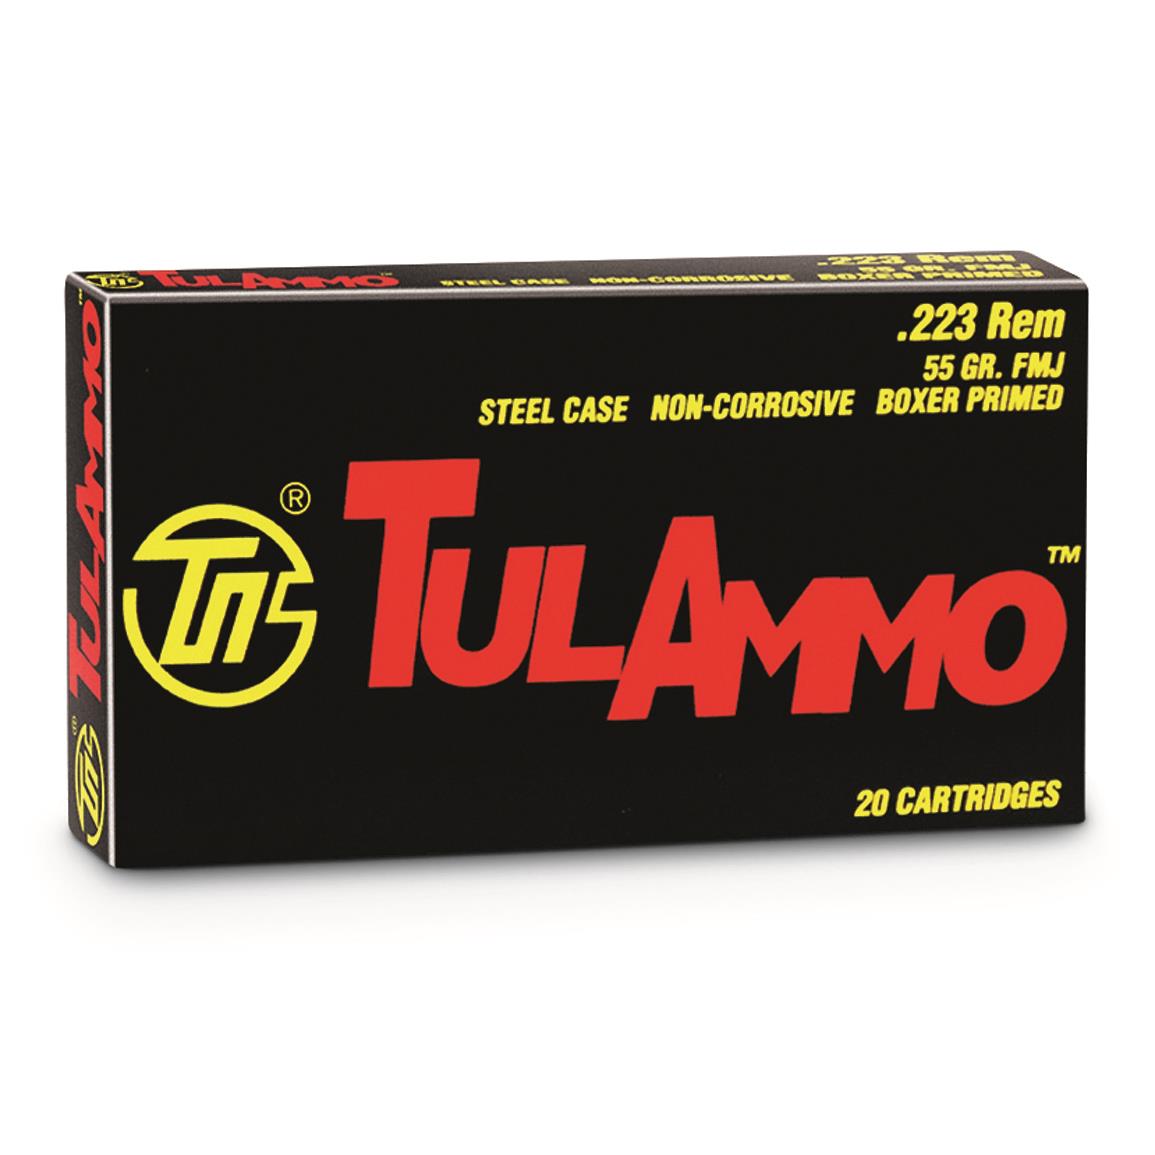 Tulammo Ammunition Gun Rifle Logo Men/'s Black T-shirt Size S to 3XL